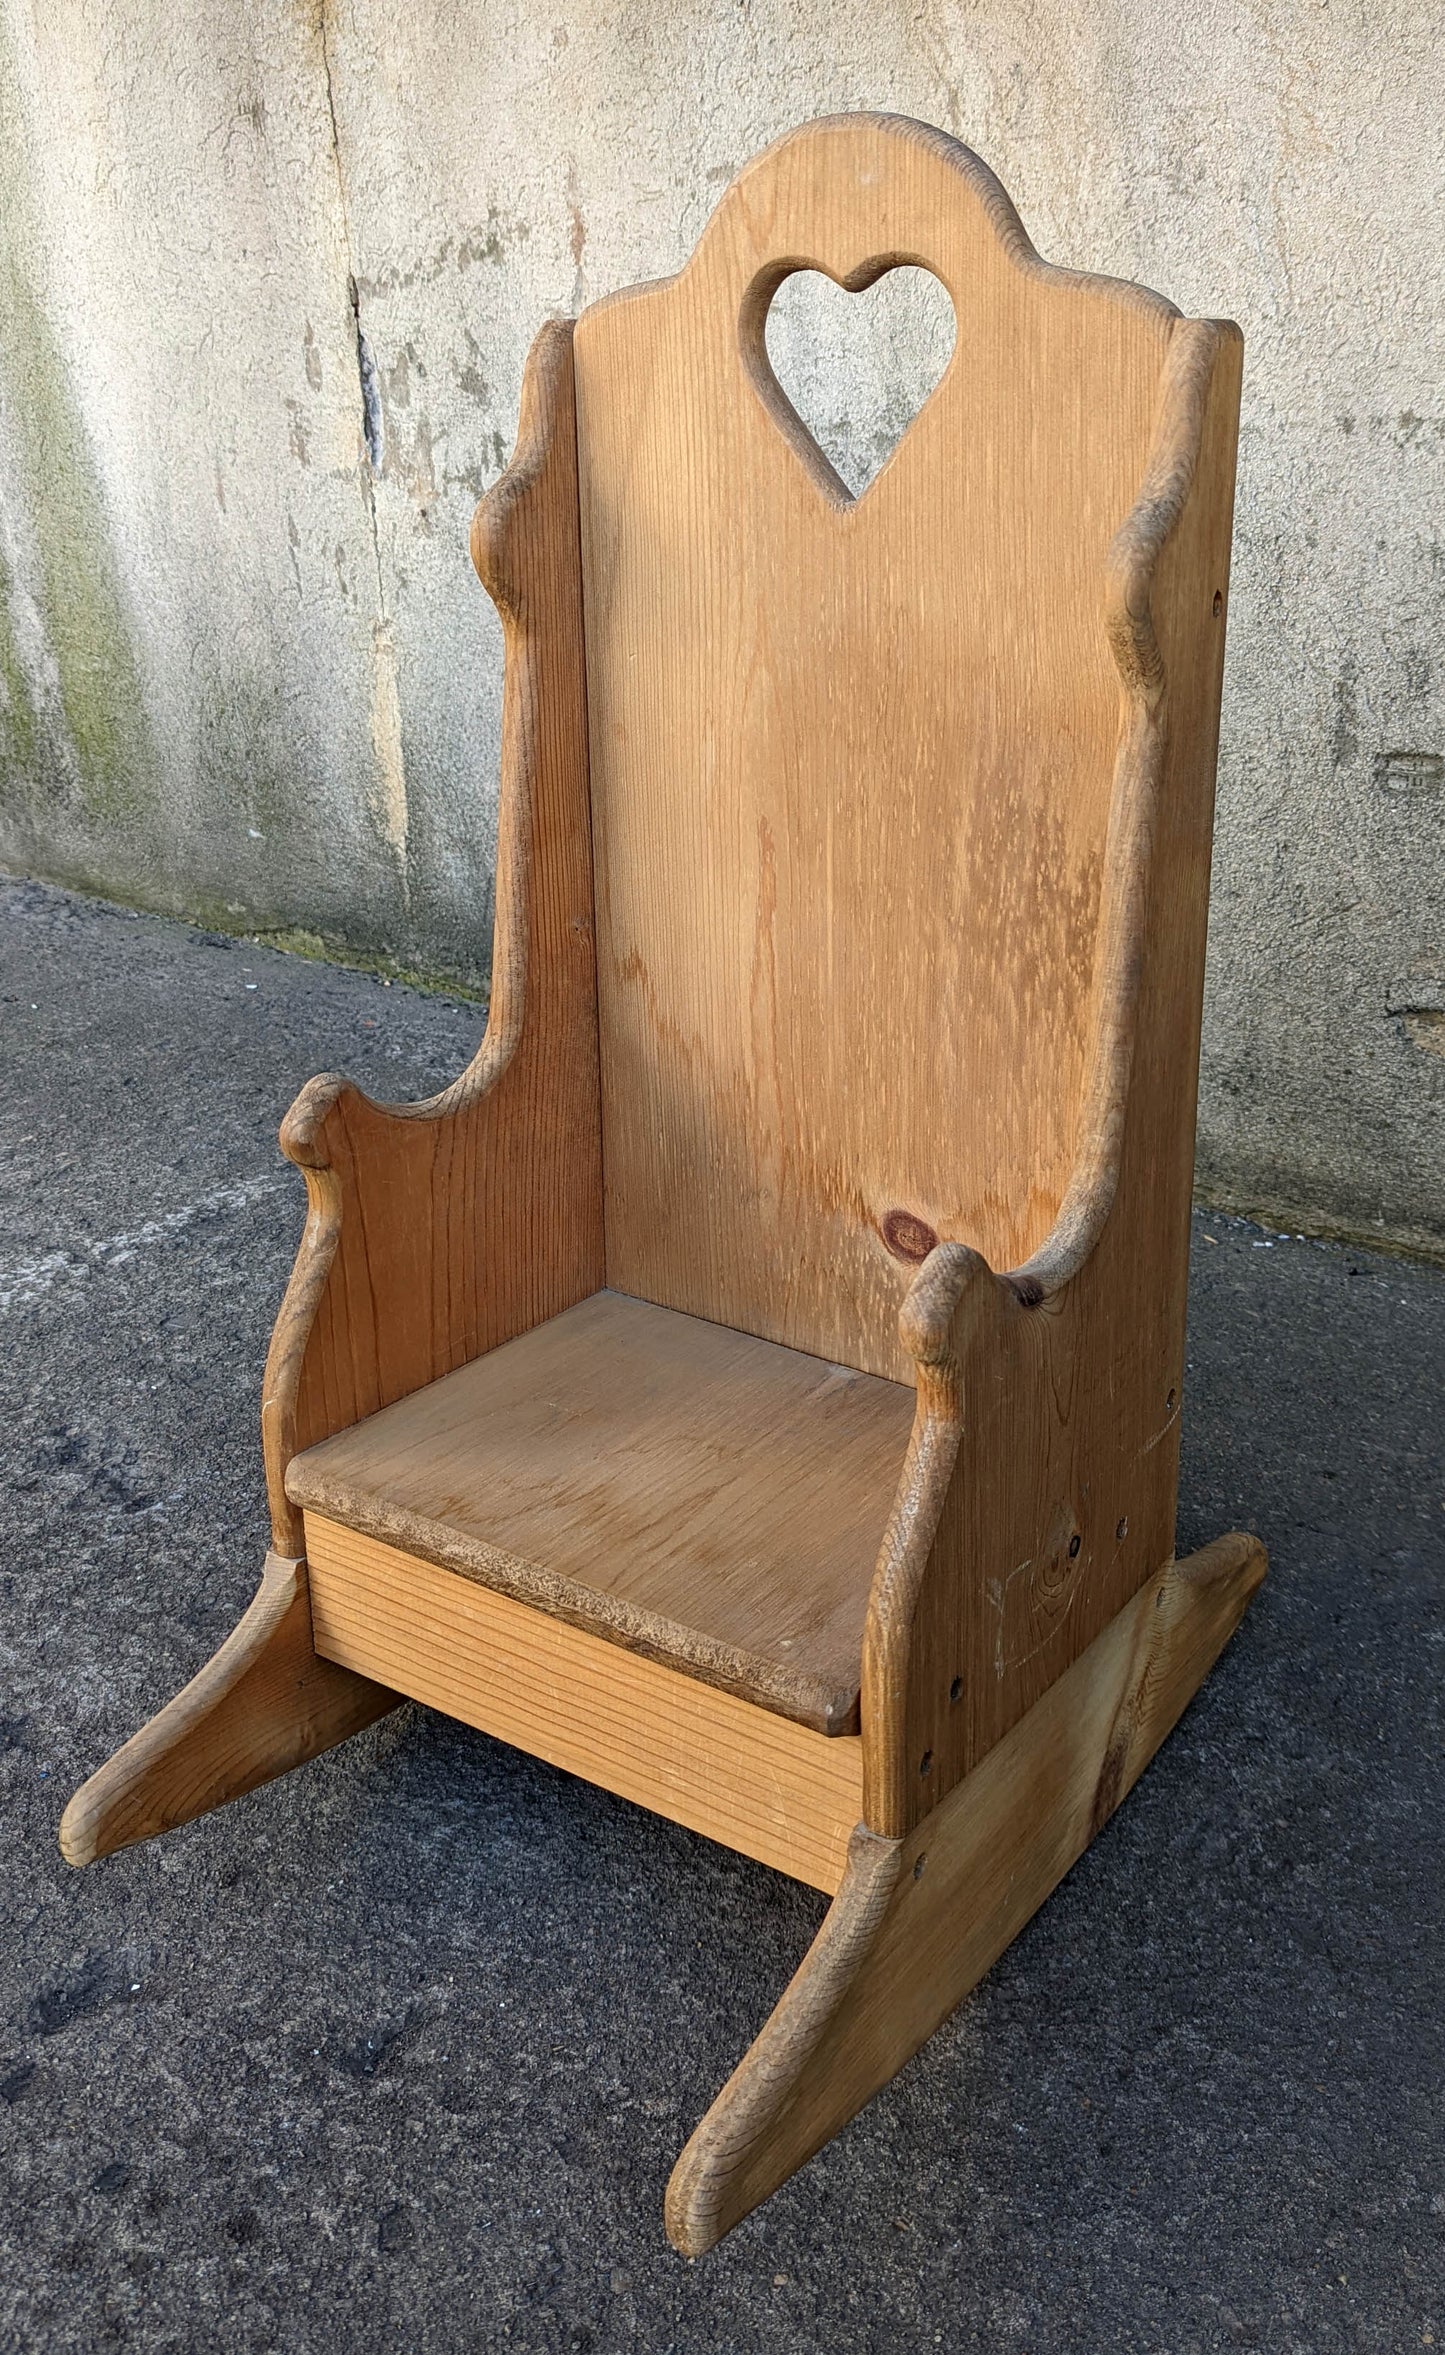 27"H Vintage Old SOLID Pine Wood Wooden Toddler Child Childrens Kids Rocking Chair Rocker Handmade Homemade Home Hand Made